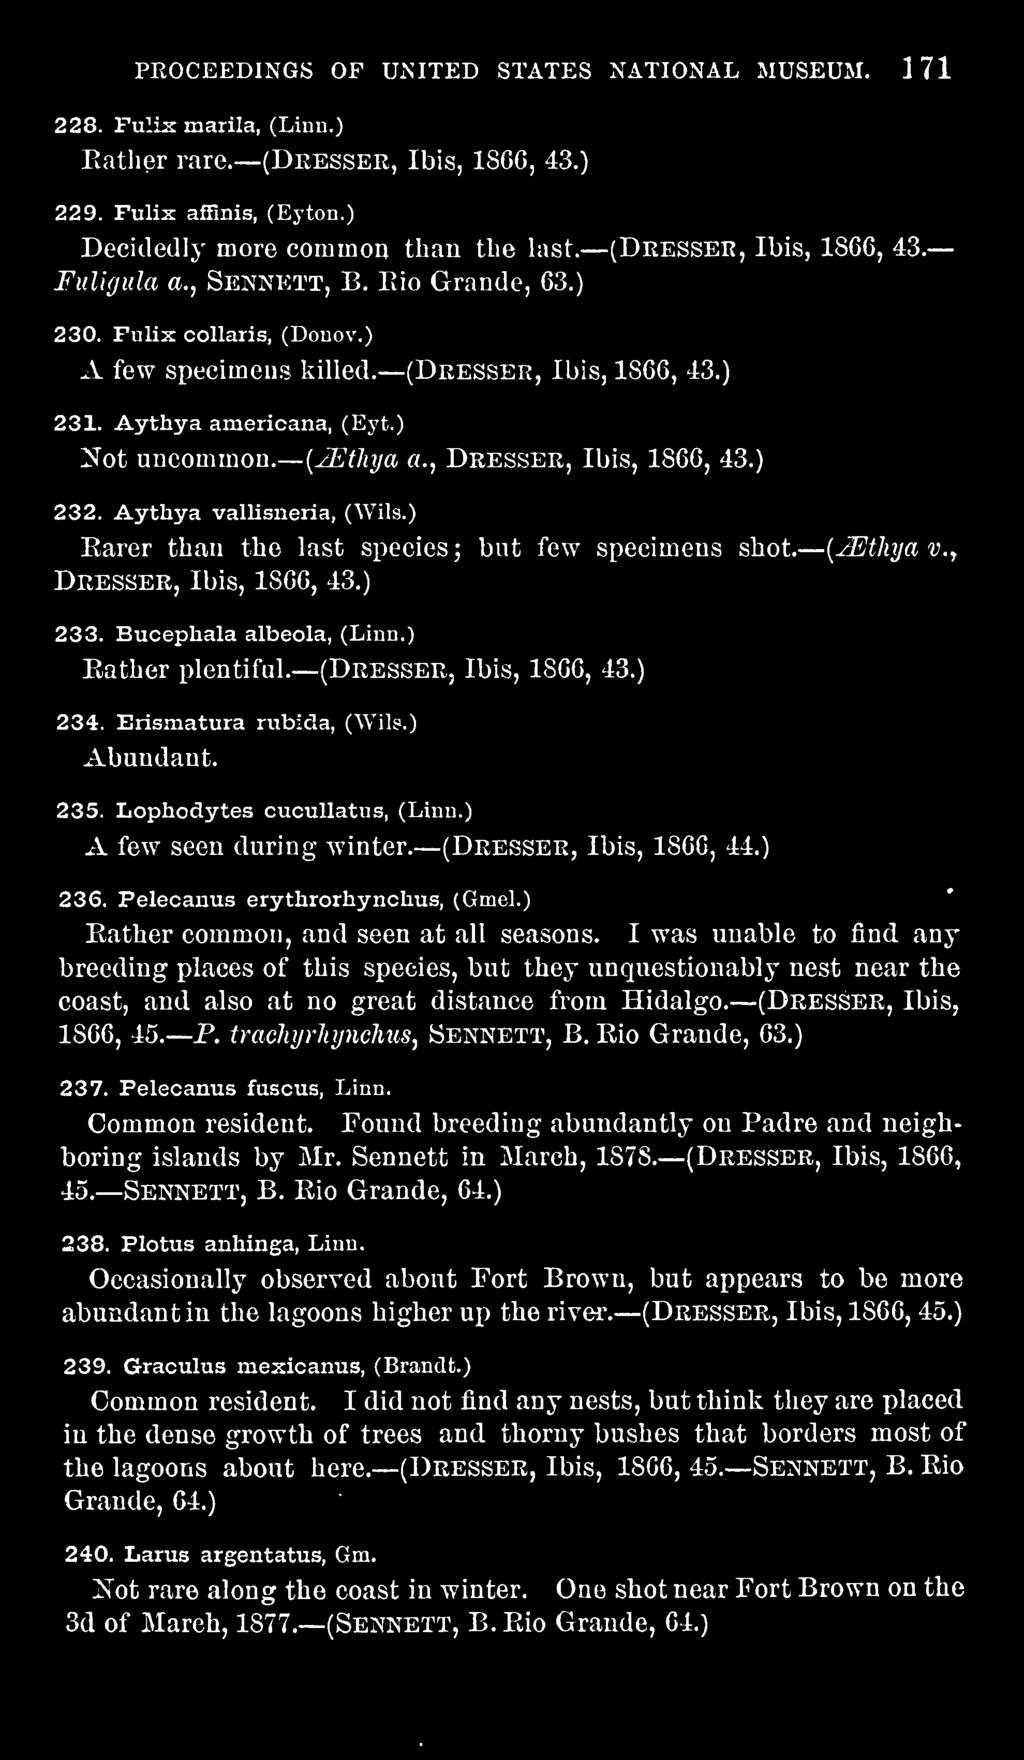 , Dresser, Ibis, 1866, 43.) 232. Aythya valusneria, (Wils.) Earer than the last species; but few specimens shot. Dresser, Ibis, 1866, 43.) 233. Bucephala albeola, (Linn.) {^thyav.y Eather plentiful.